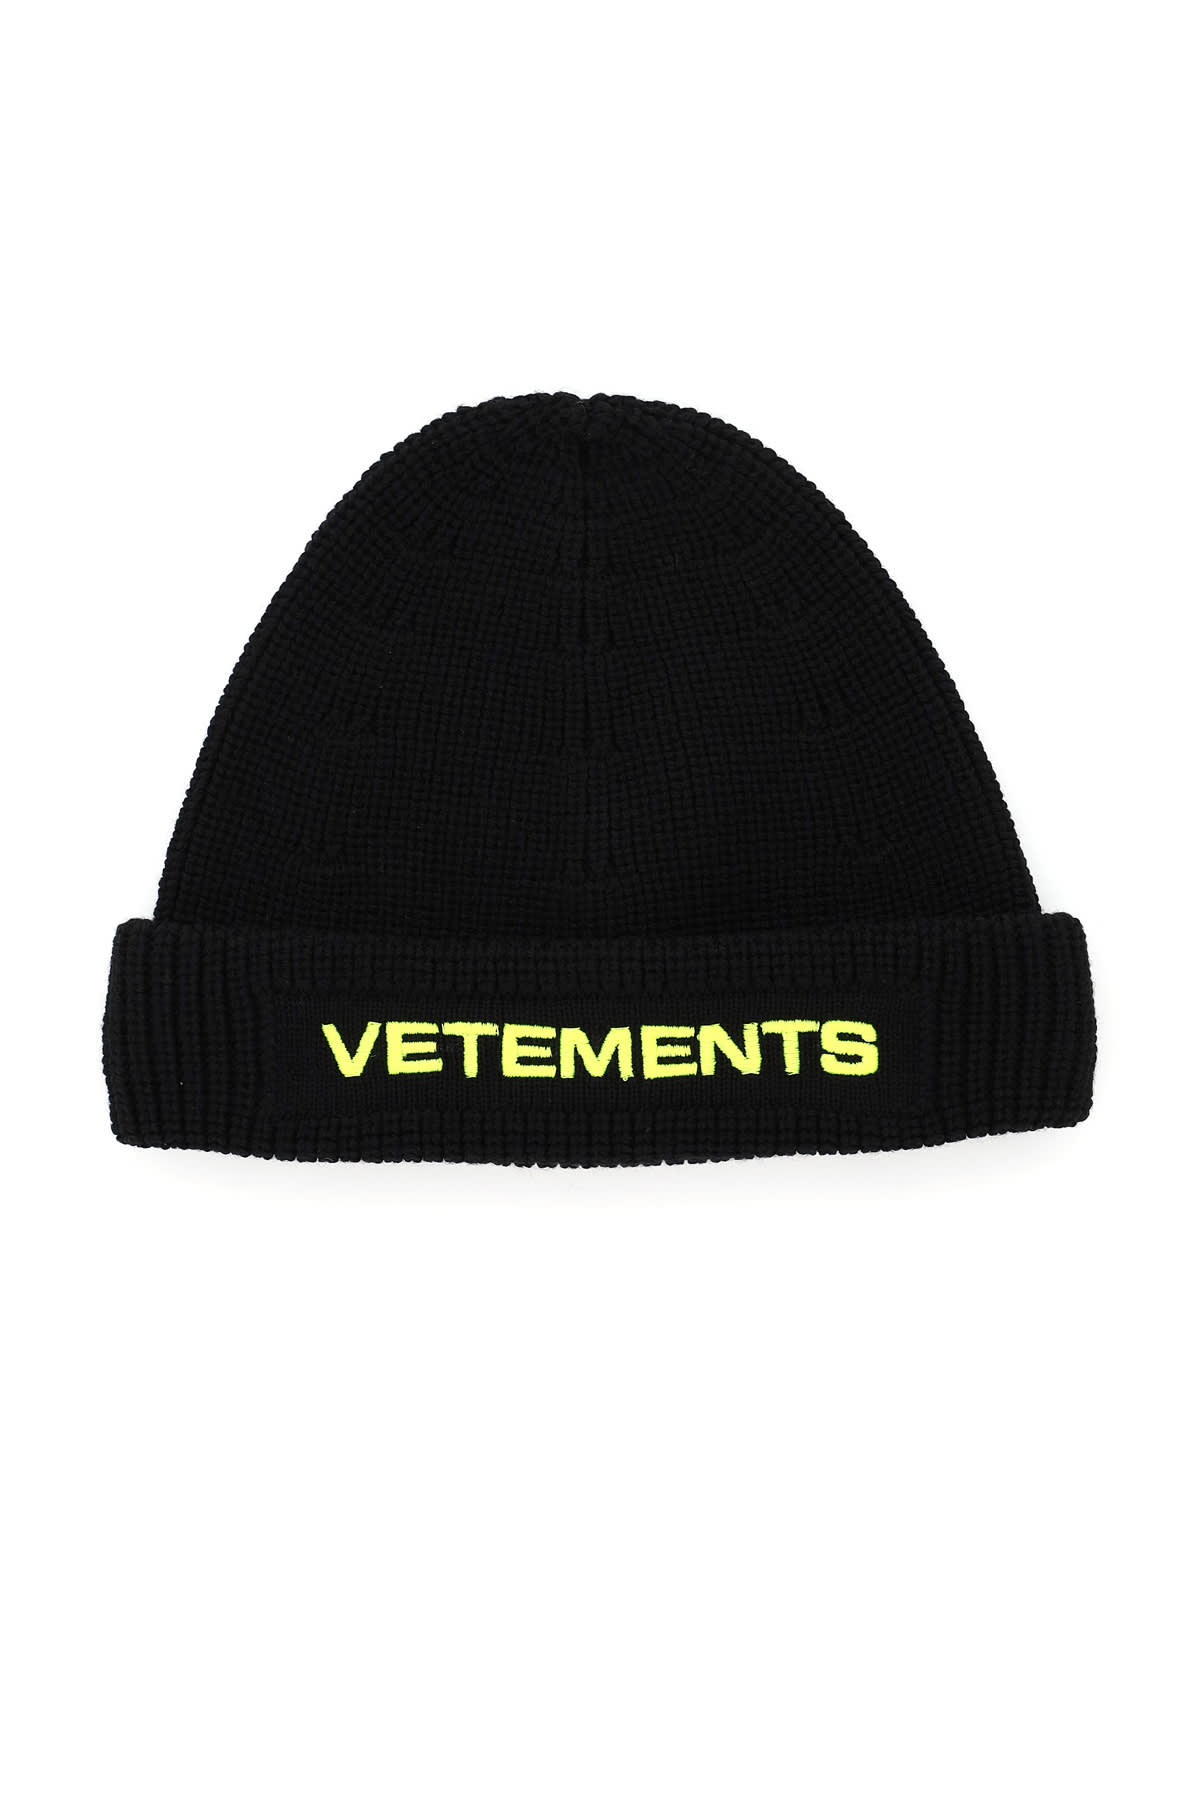 VETEMENTS Logo Beanie Hat